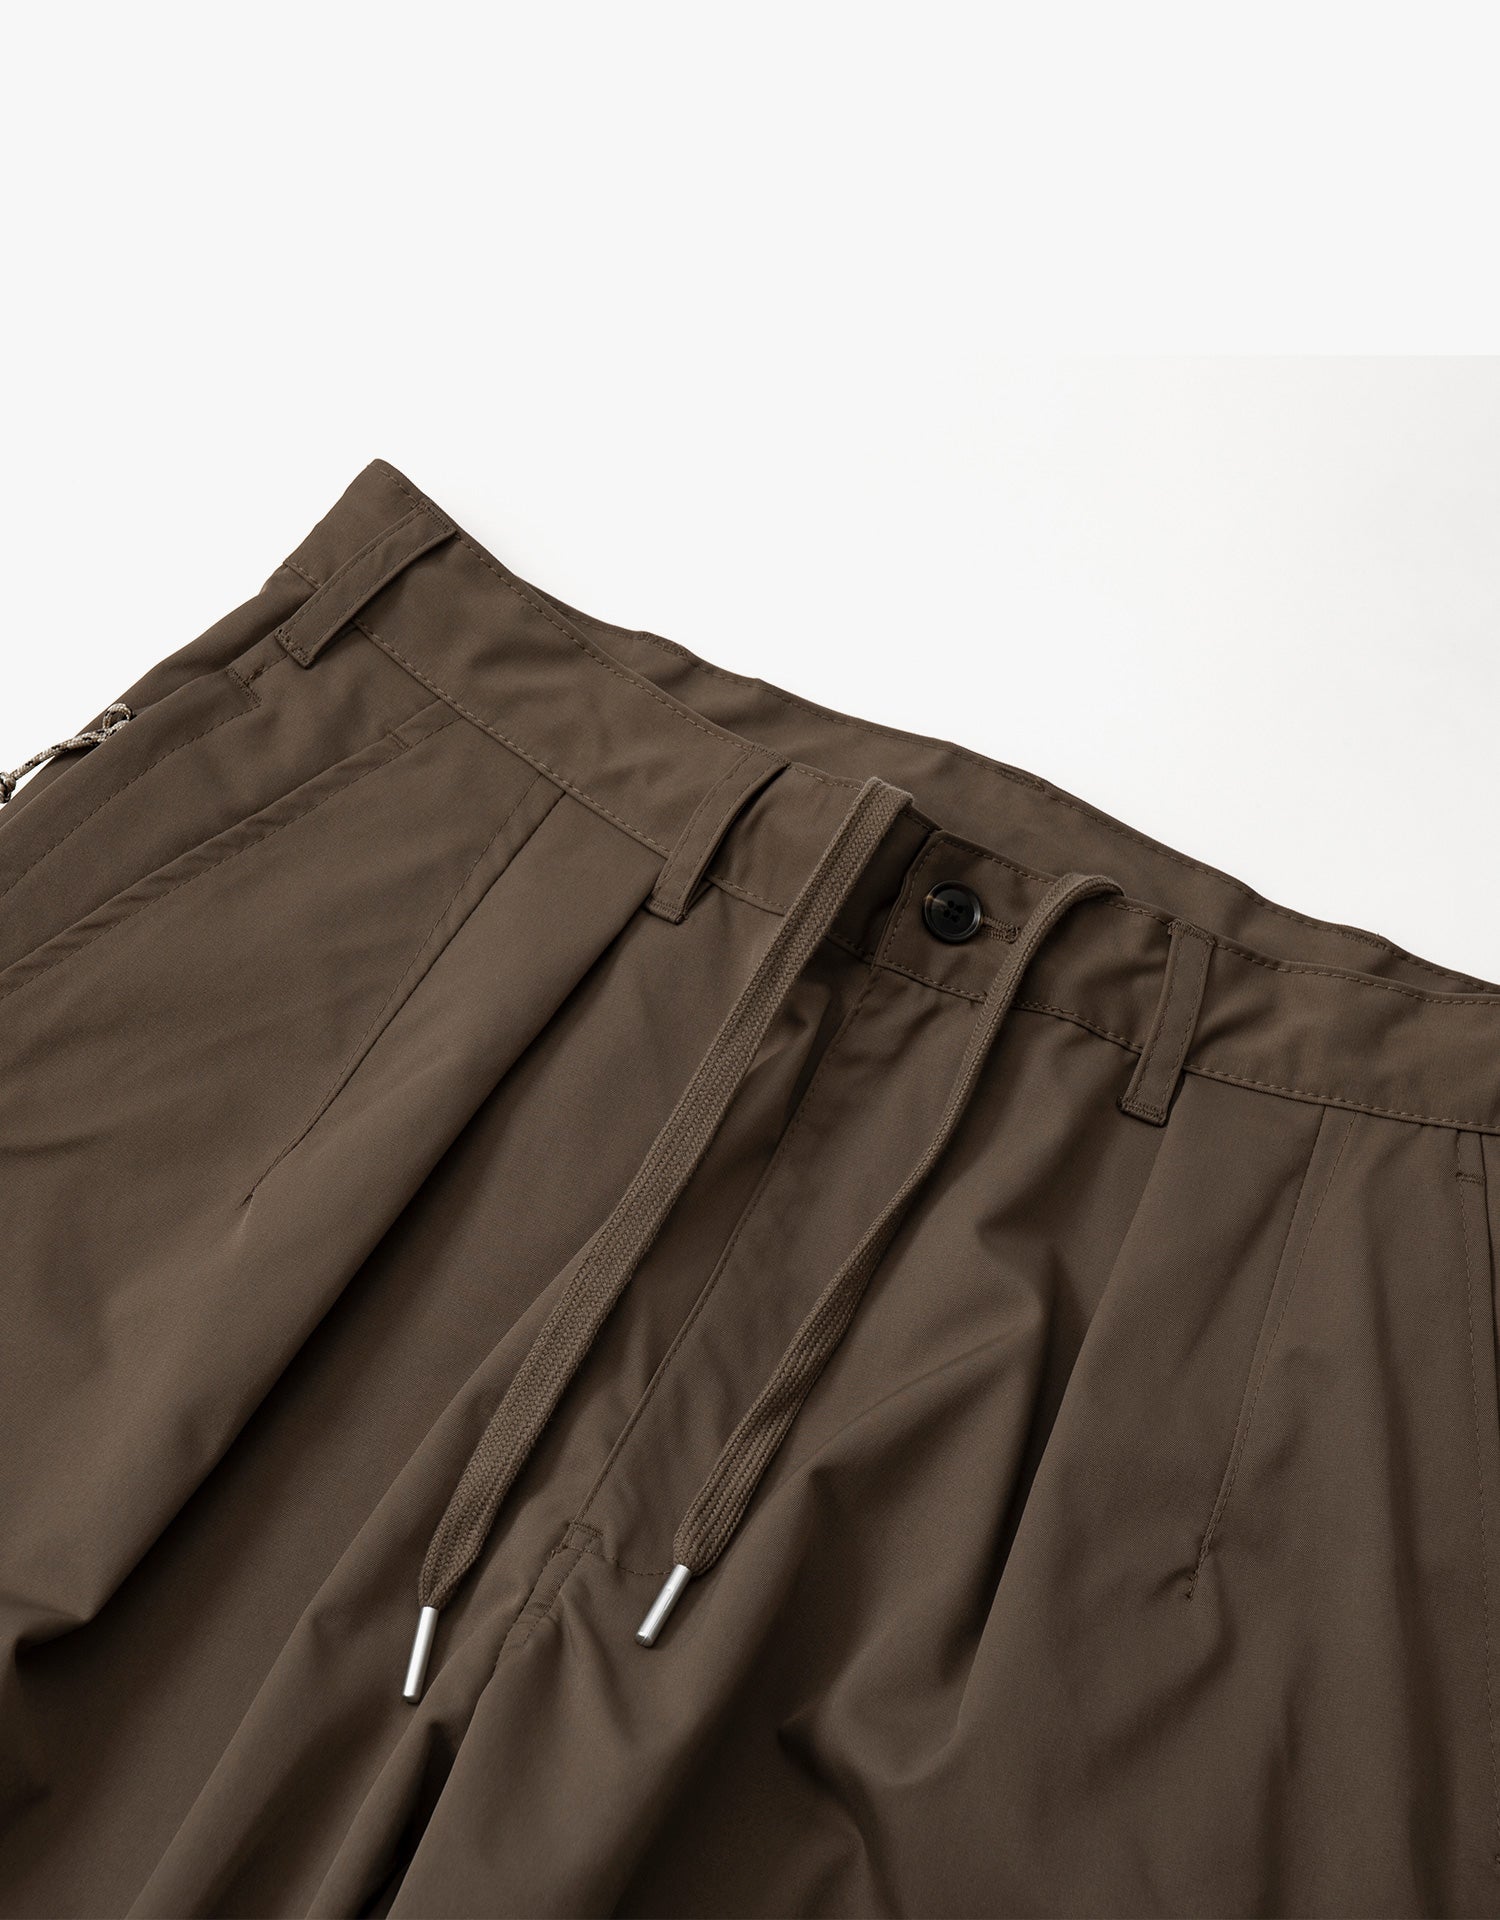 TopBasics Six Pockets Pleated Camping Pants